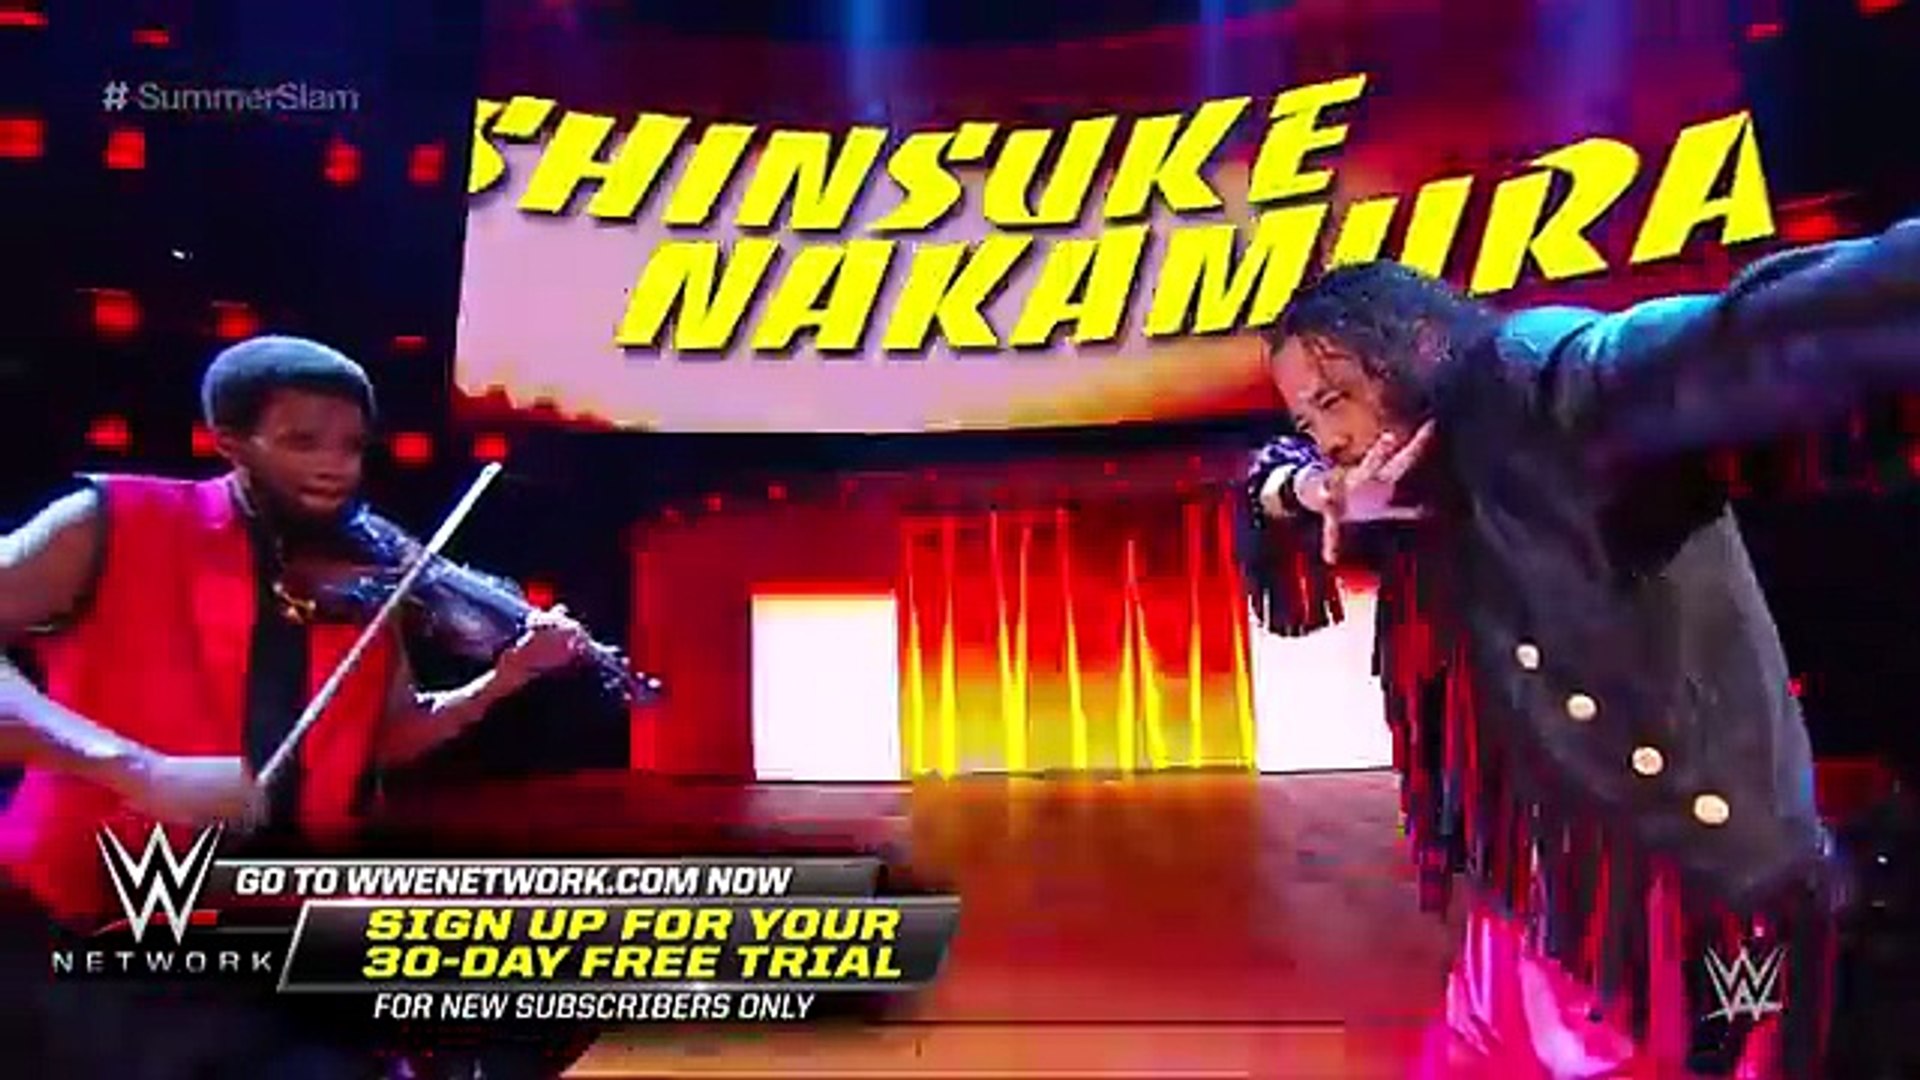 Shinsuke Nakamura's entrance wows the WWE Universe: SummerSlam